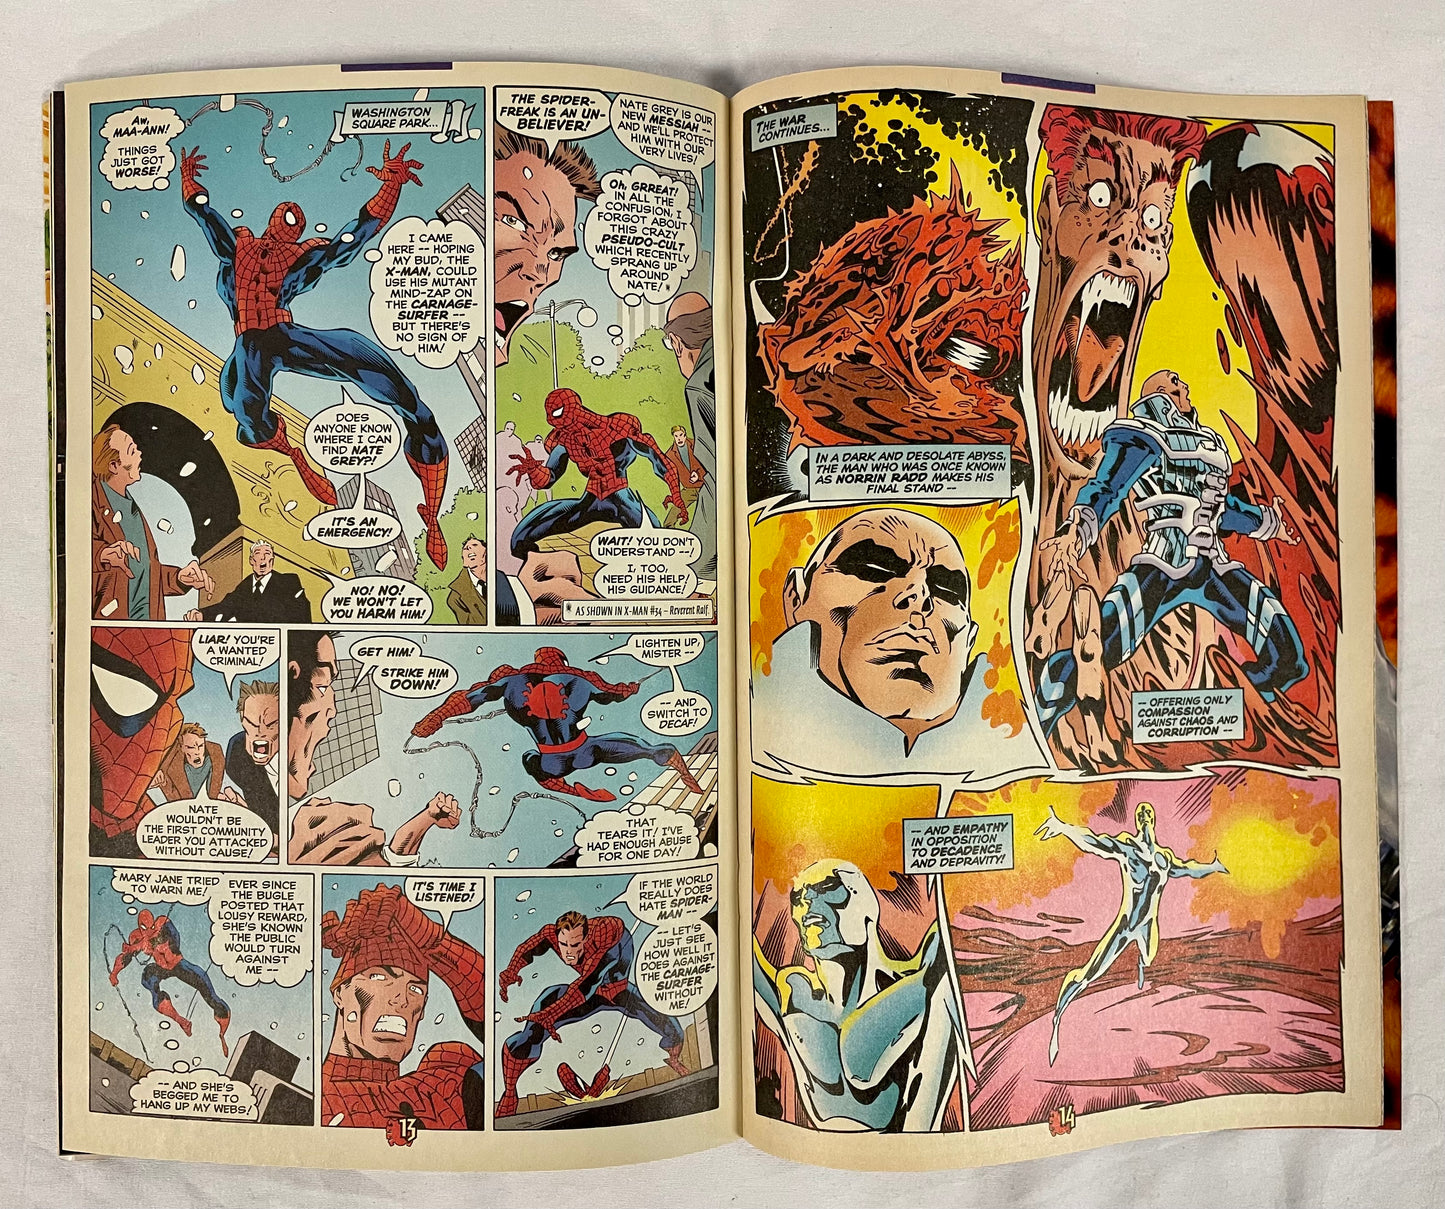 Marvel Comics The Amazing Spider-Man #431 (Defalco, Bennet, Larosa)